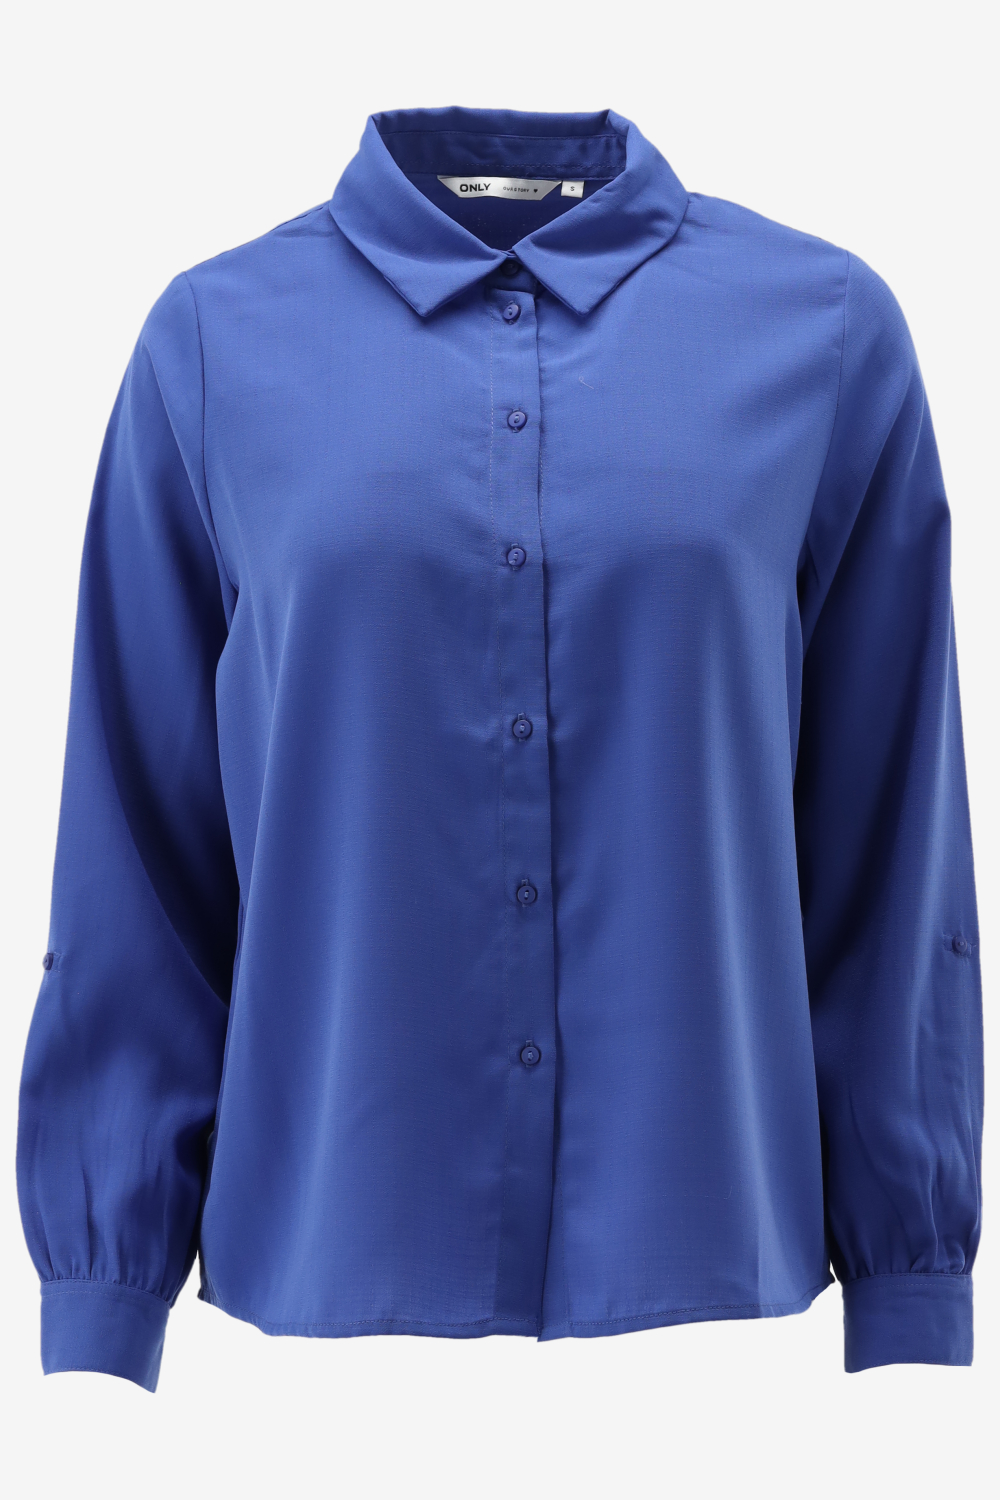 Only Onlmulan L/s Fold Up Shirt Dazzling Blue BLAUW XS